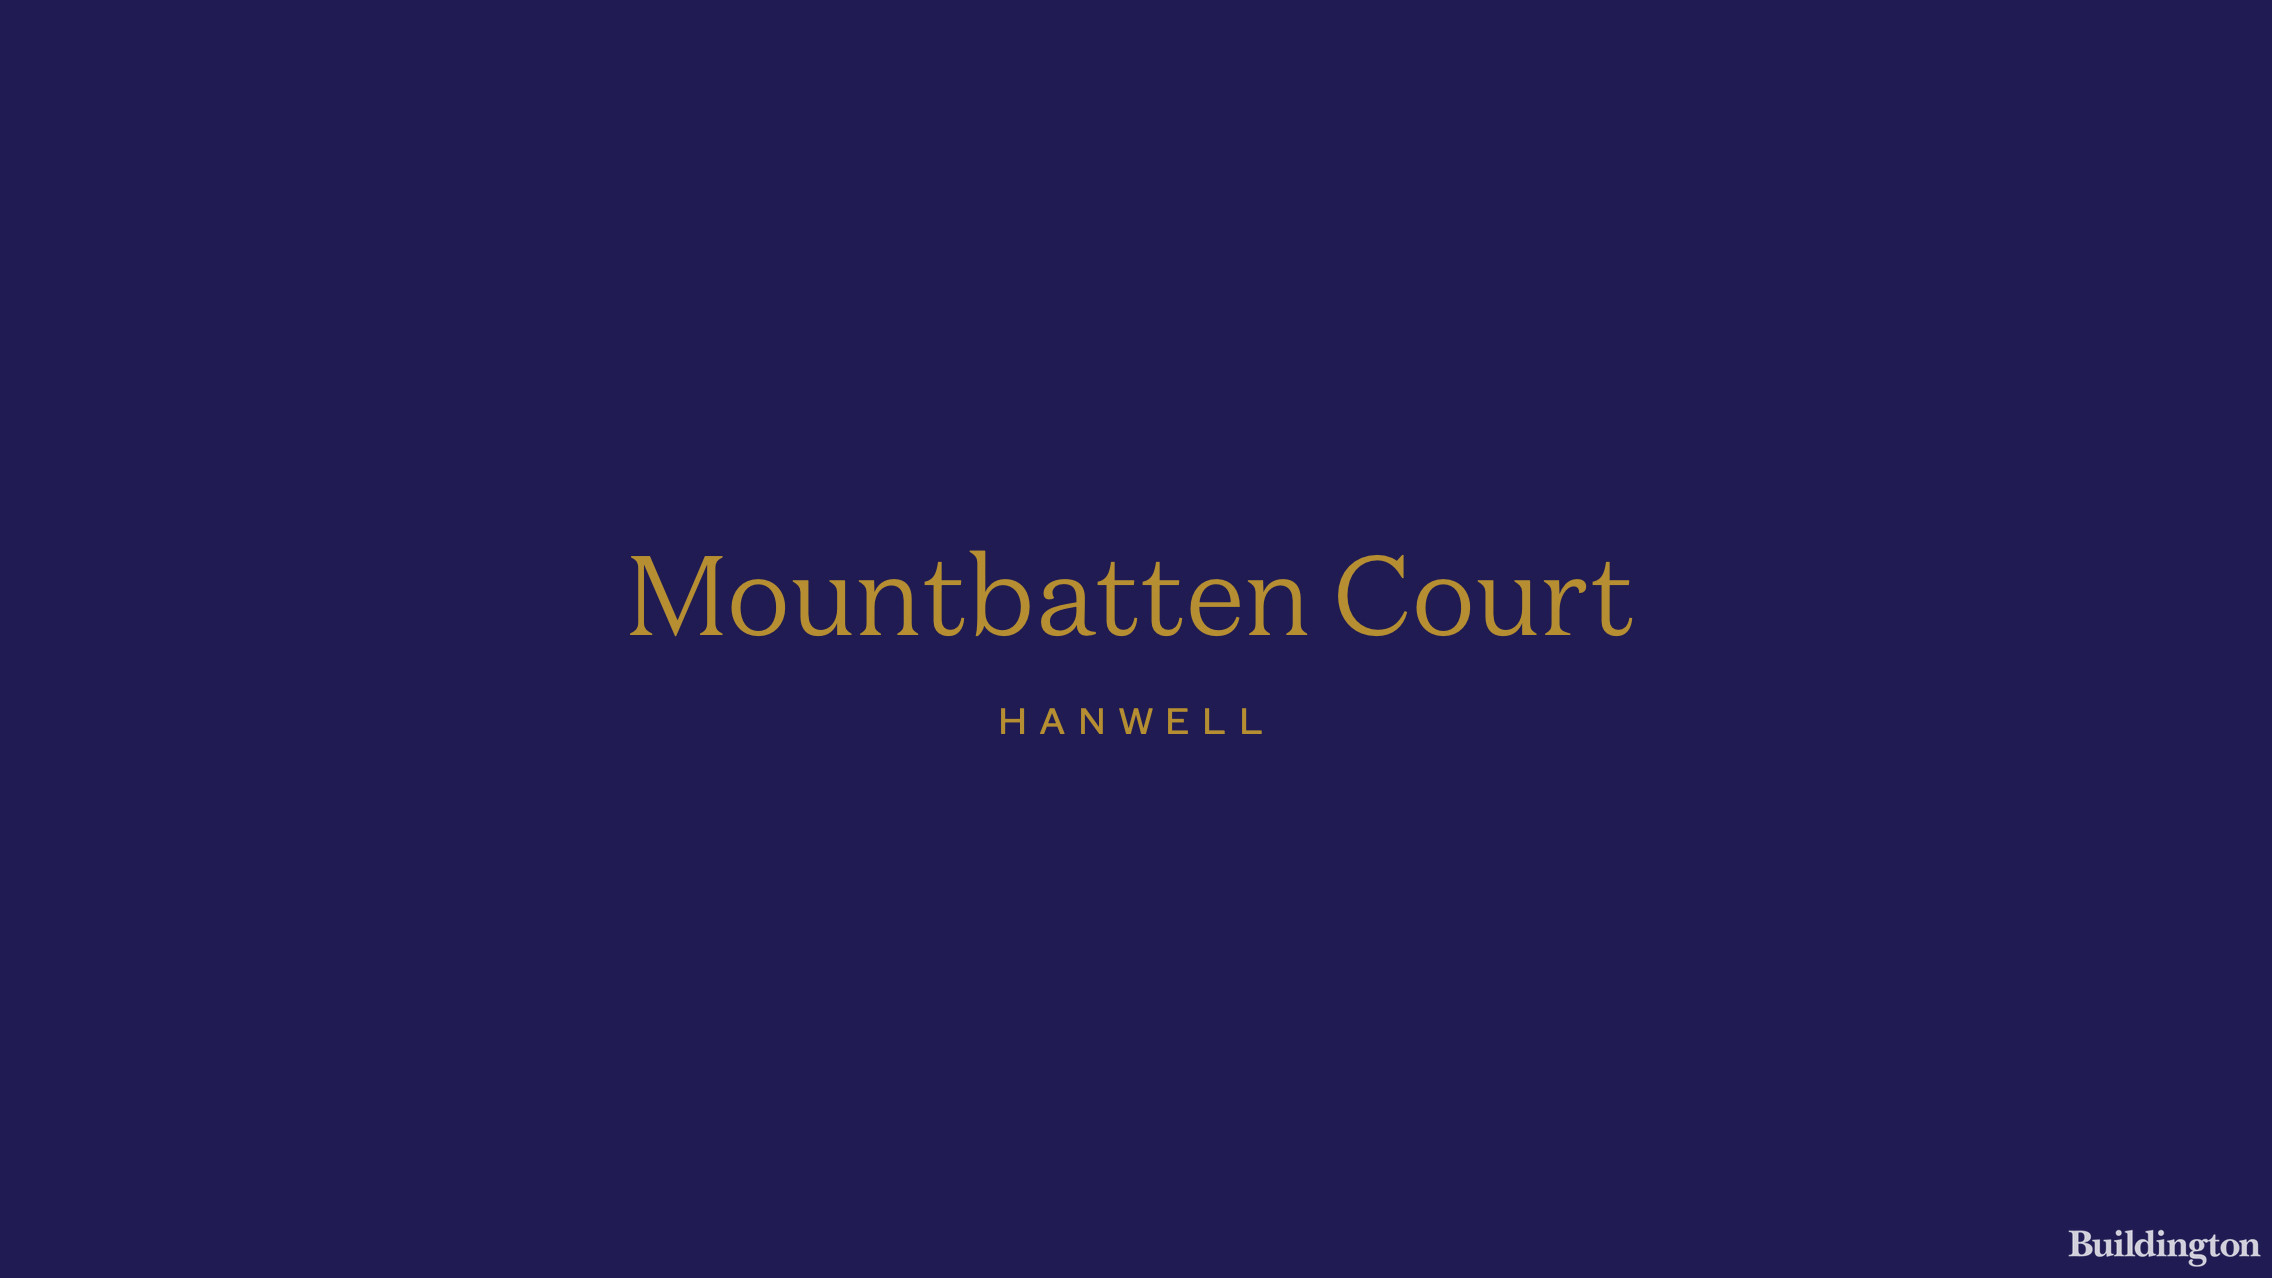 Mountbatten Court development logo.